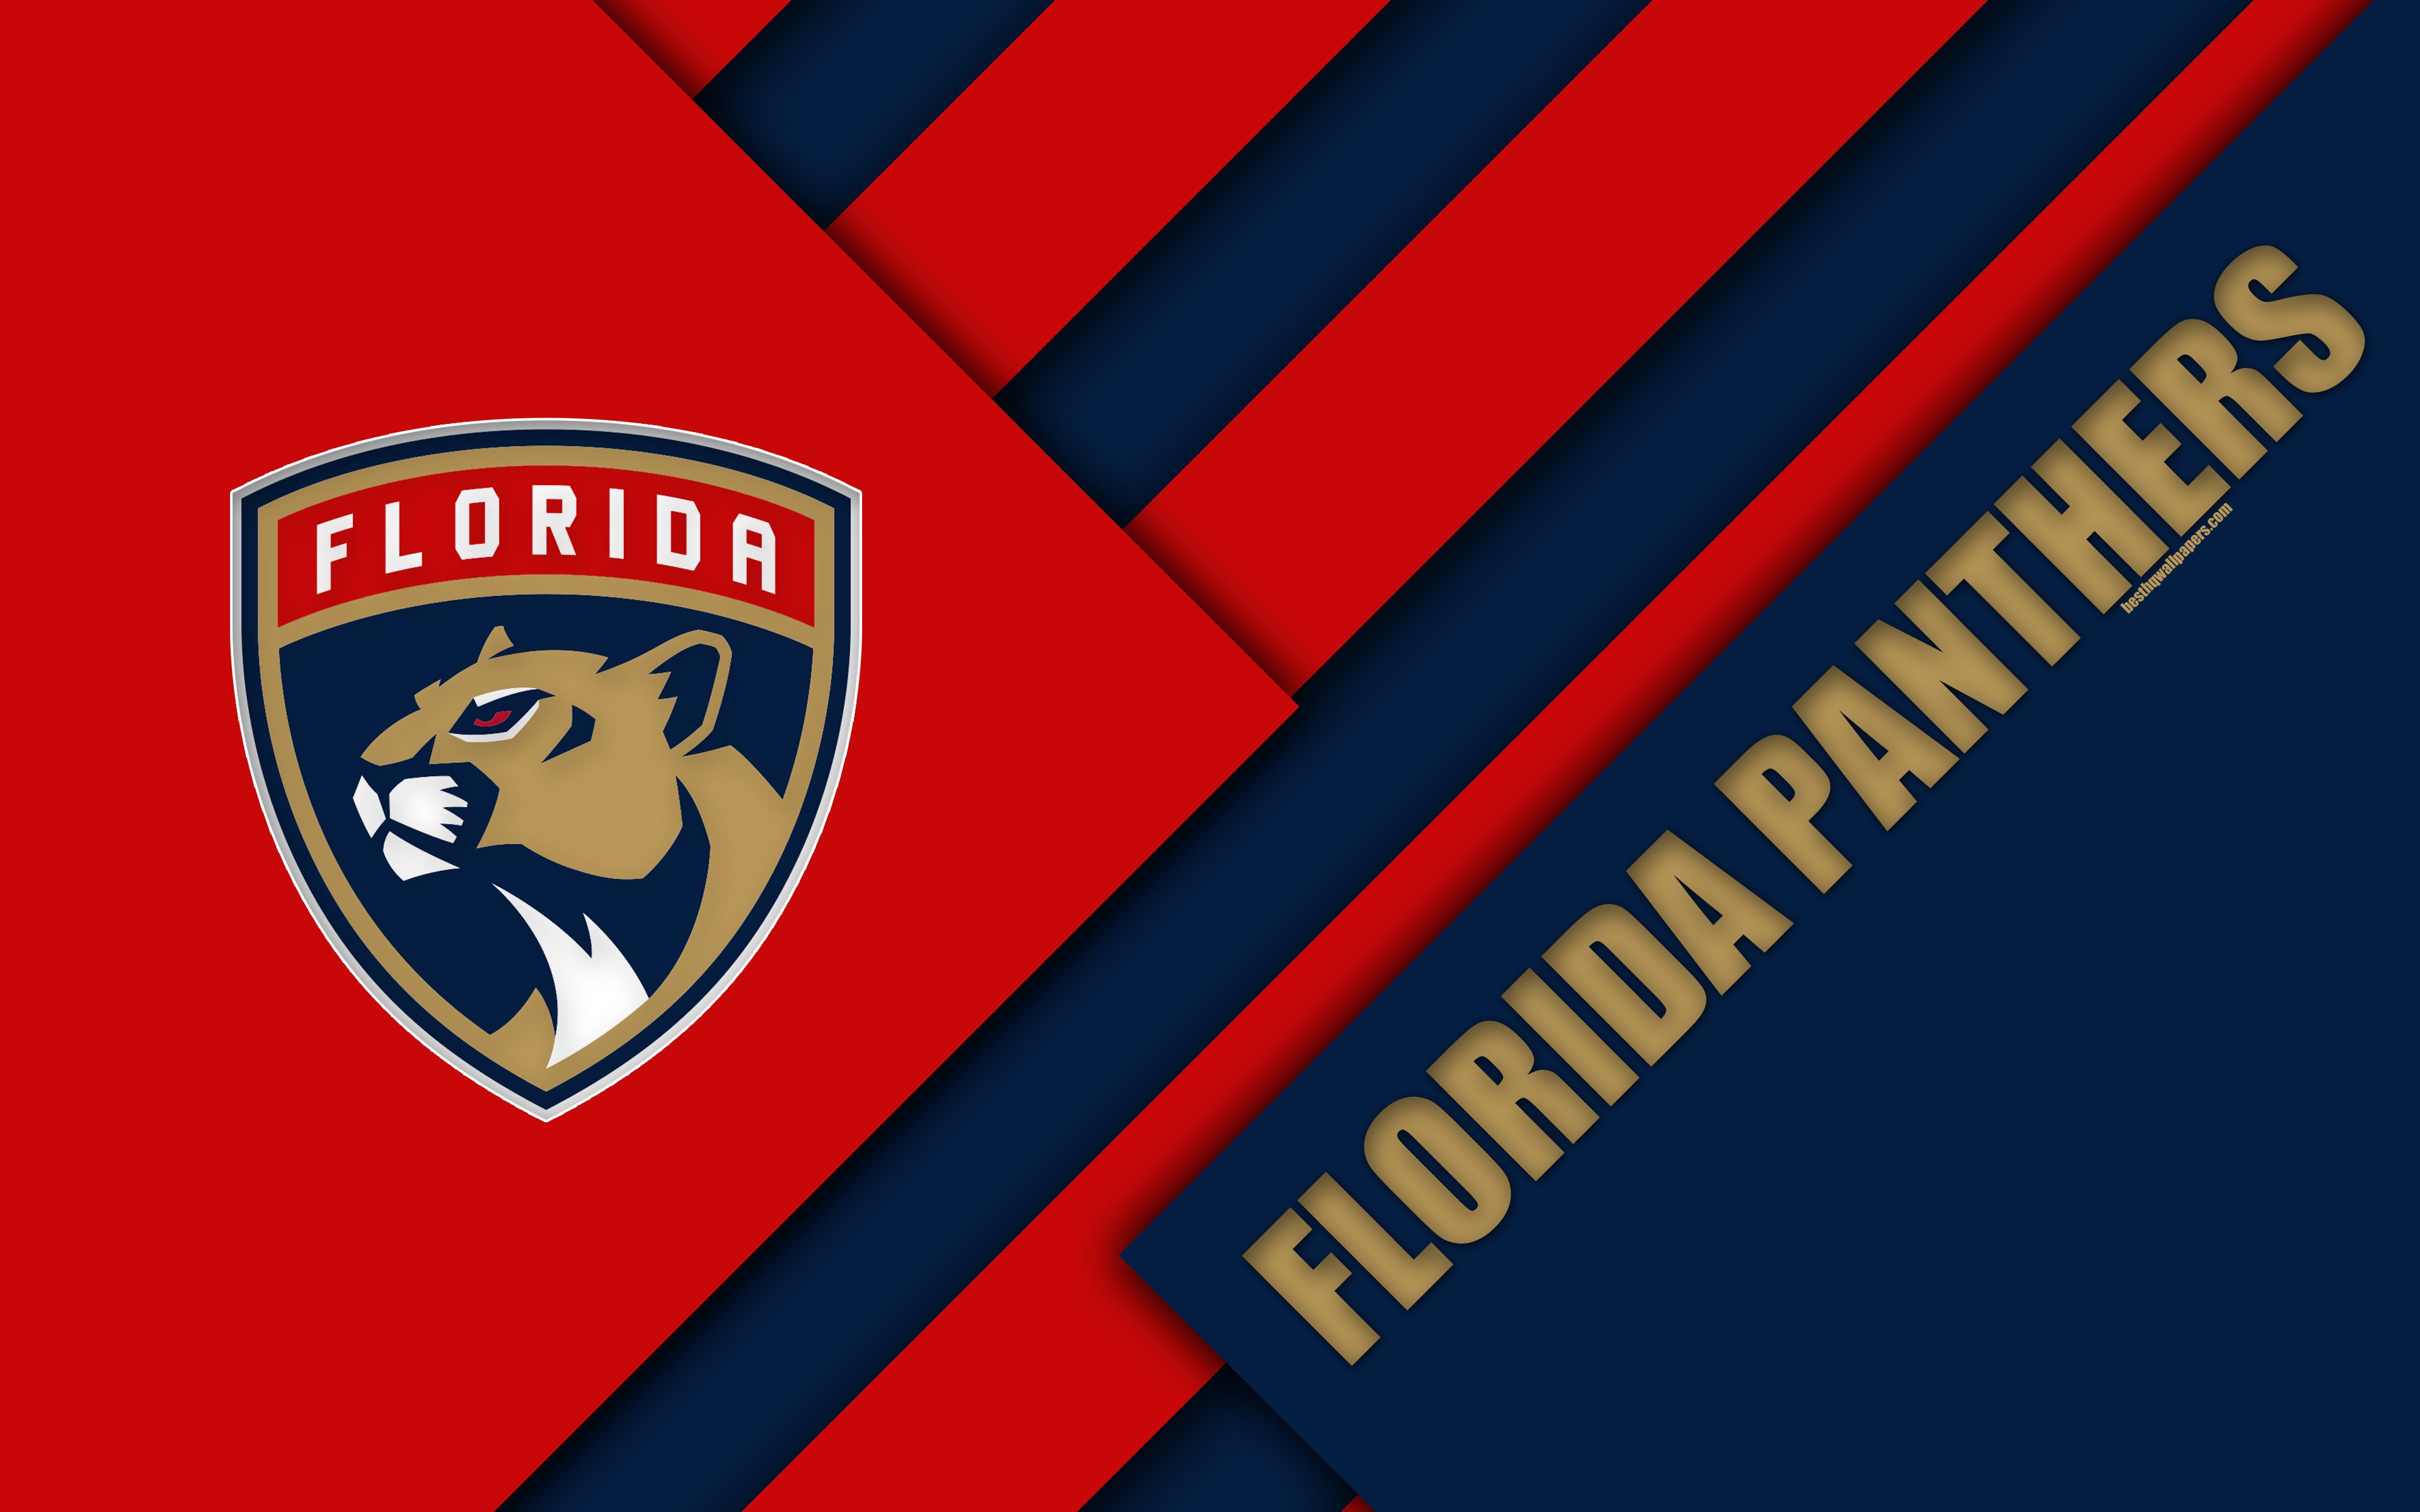 Download wallpaper Florida Panthers, 4k, material design